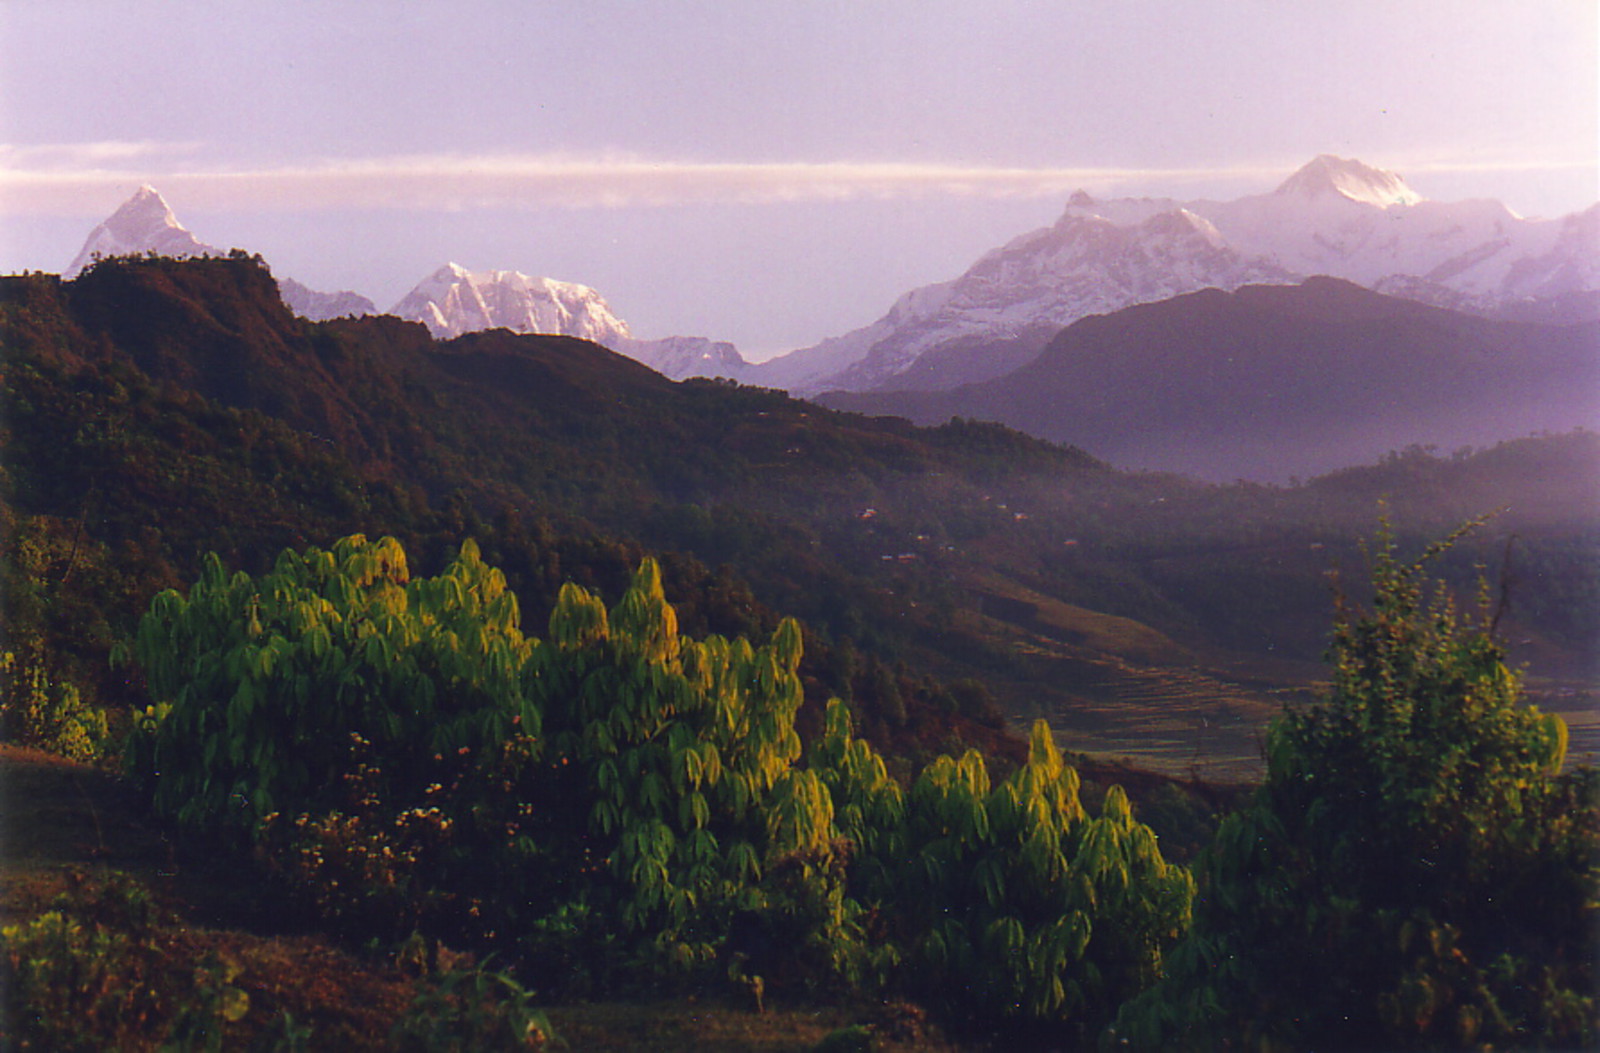 The Annapurna Range from Pokhara